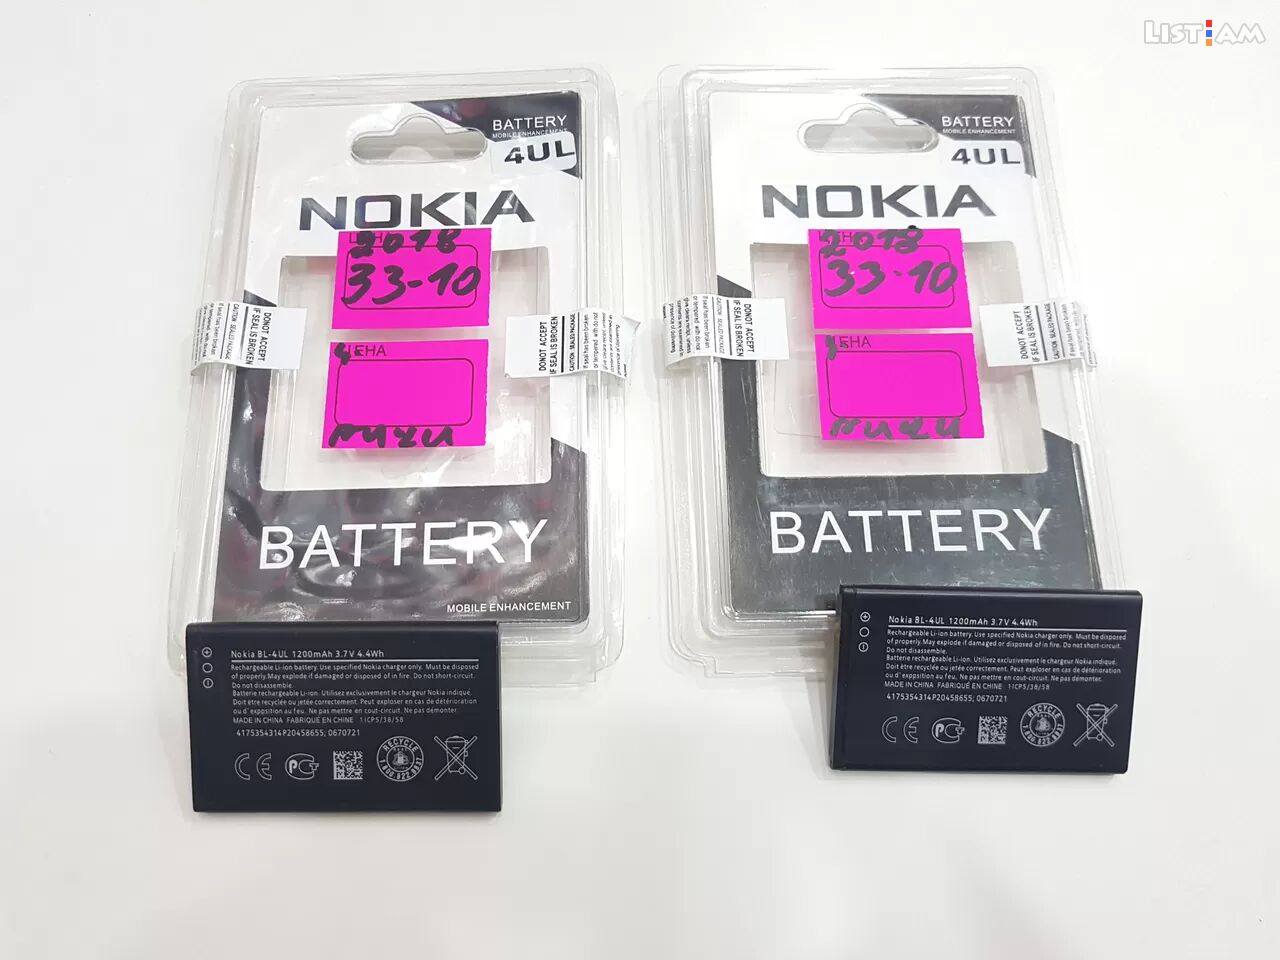 Nokia 3310 battery